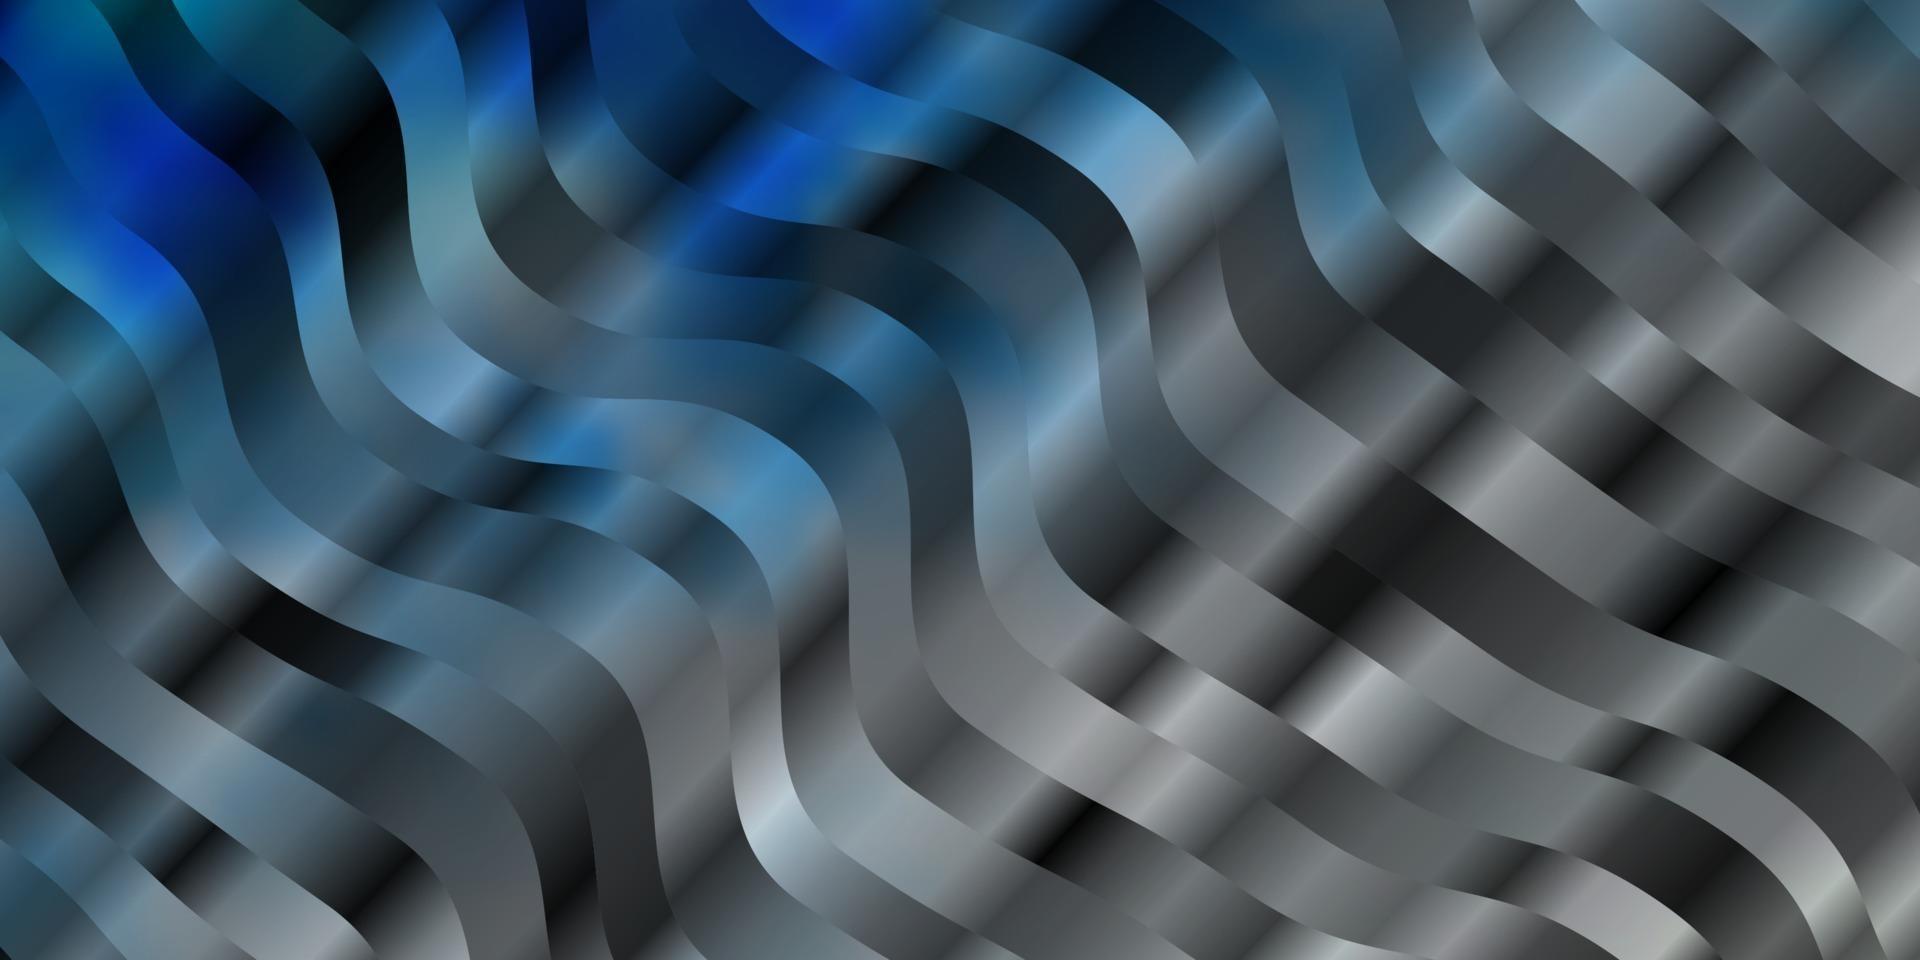 ljusblå vektorbakgrund med böjda linjer. vektor